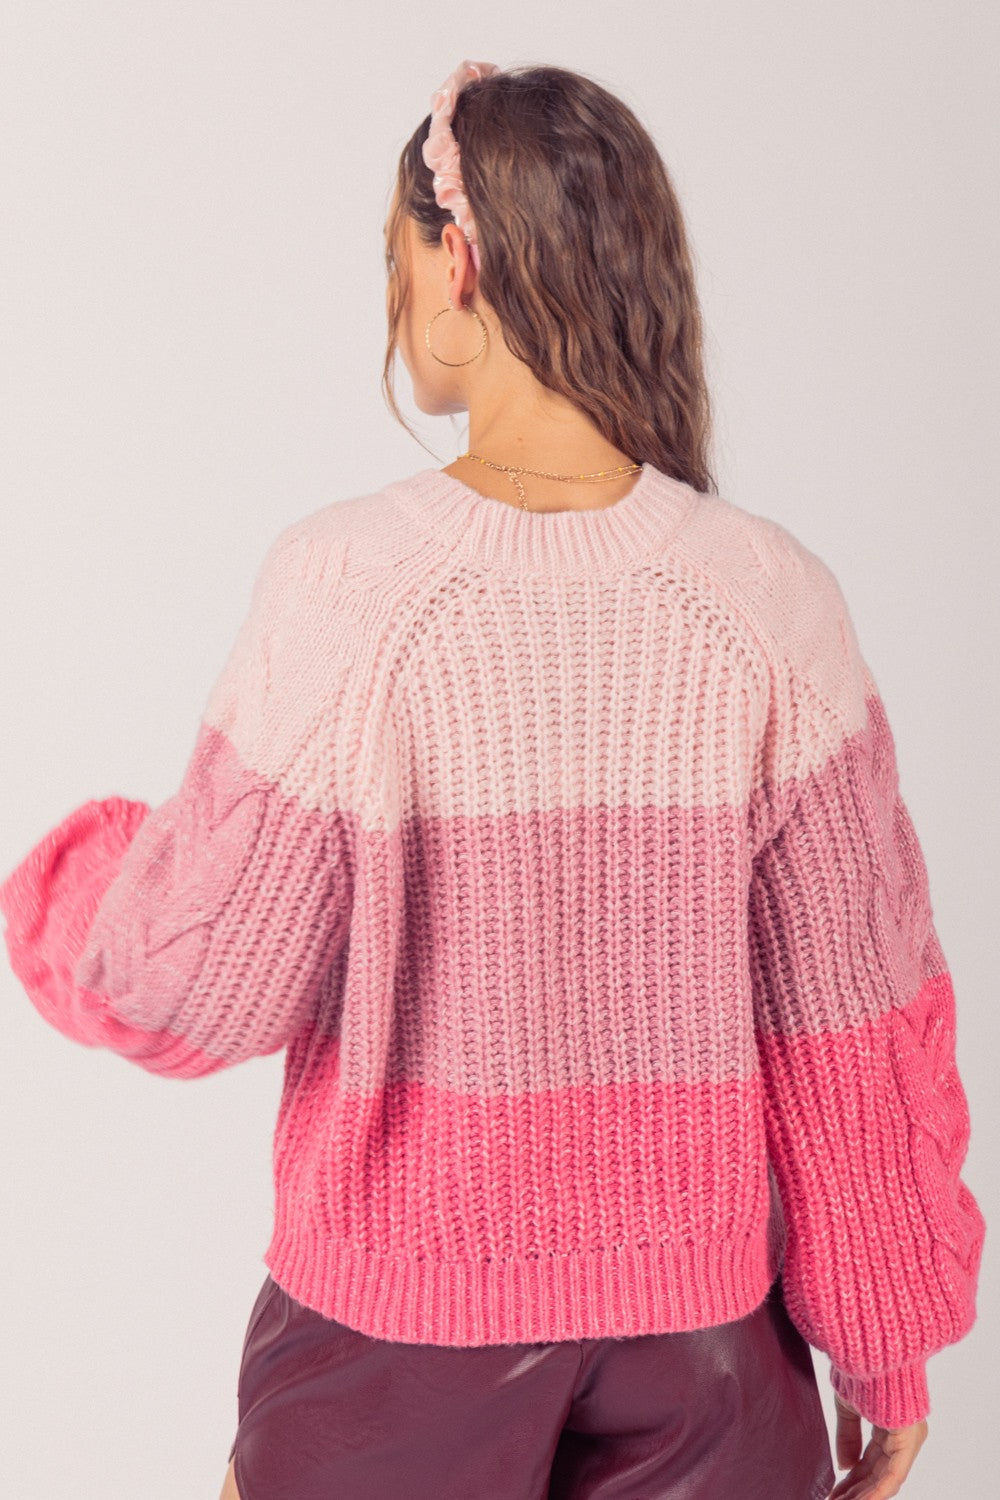 Pinkberrie Sweater